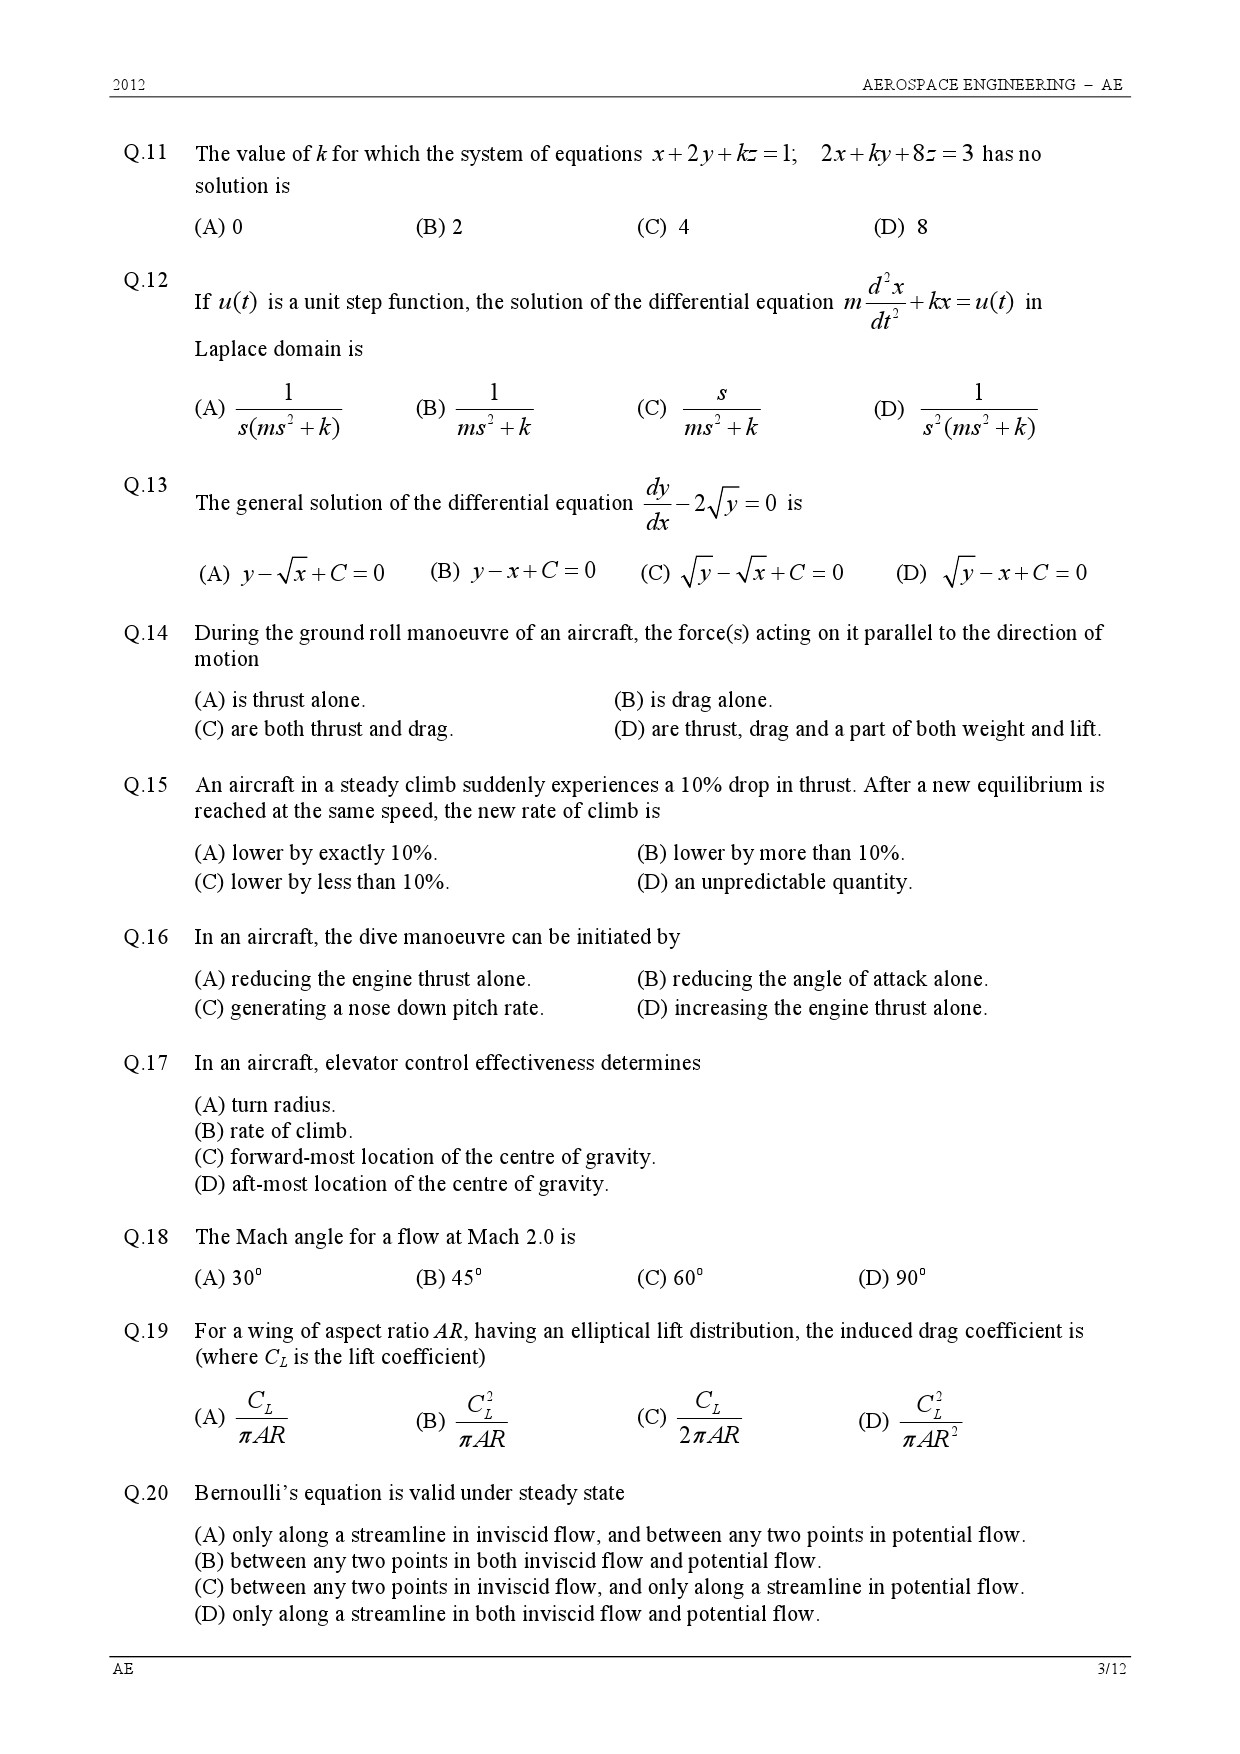 GATE Exam 2012 Aerospace Engineering Question Paper 3